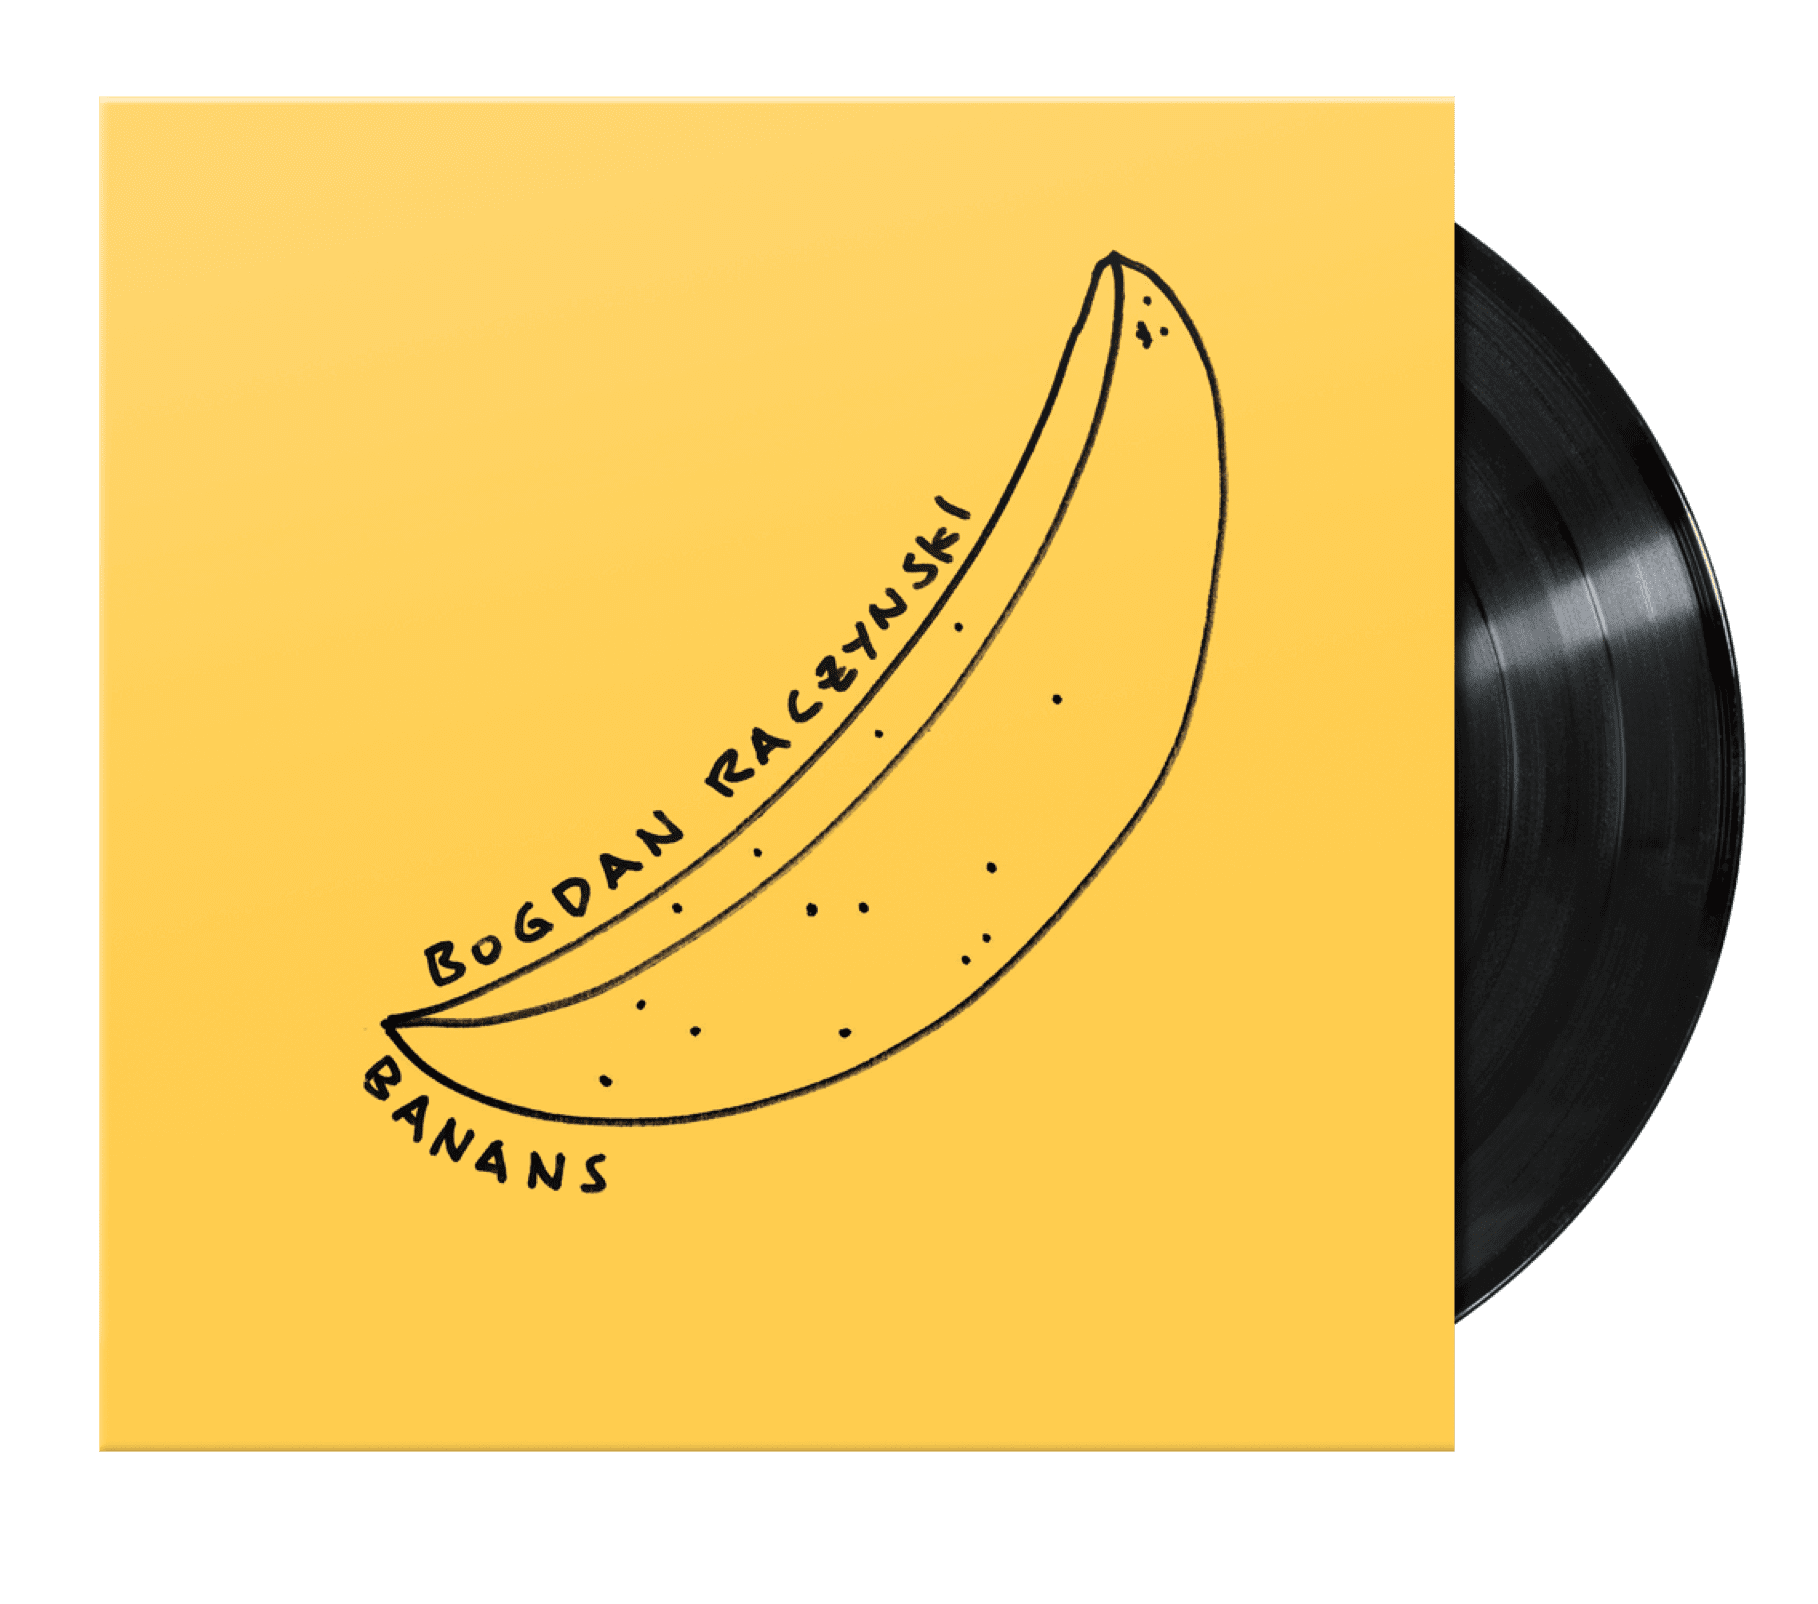 Album cover - Banans